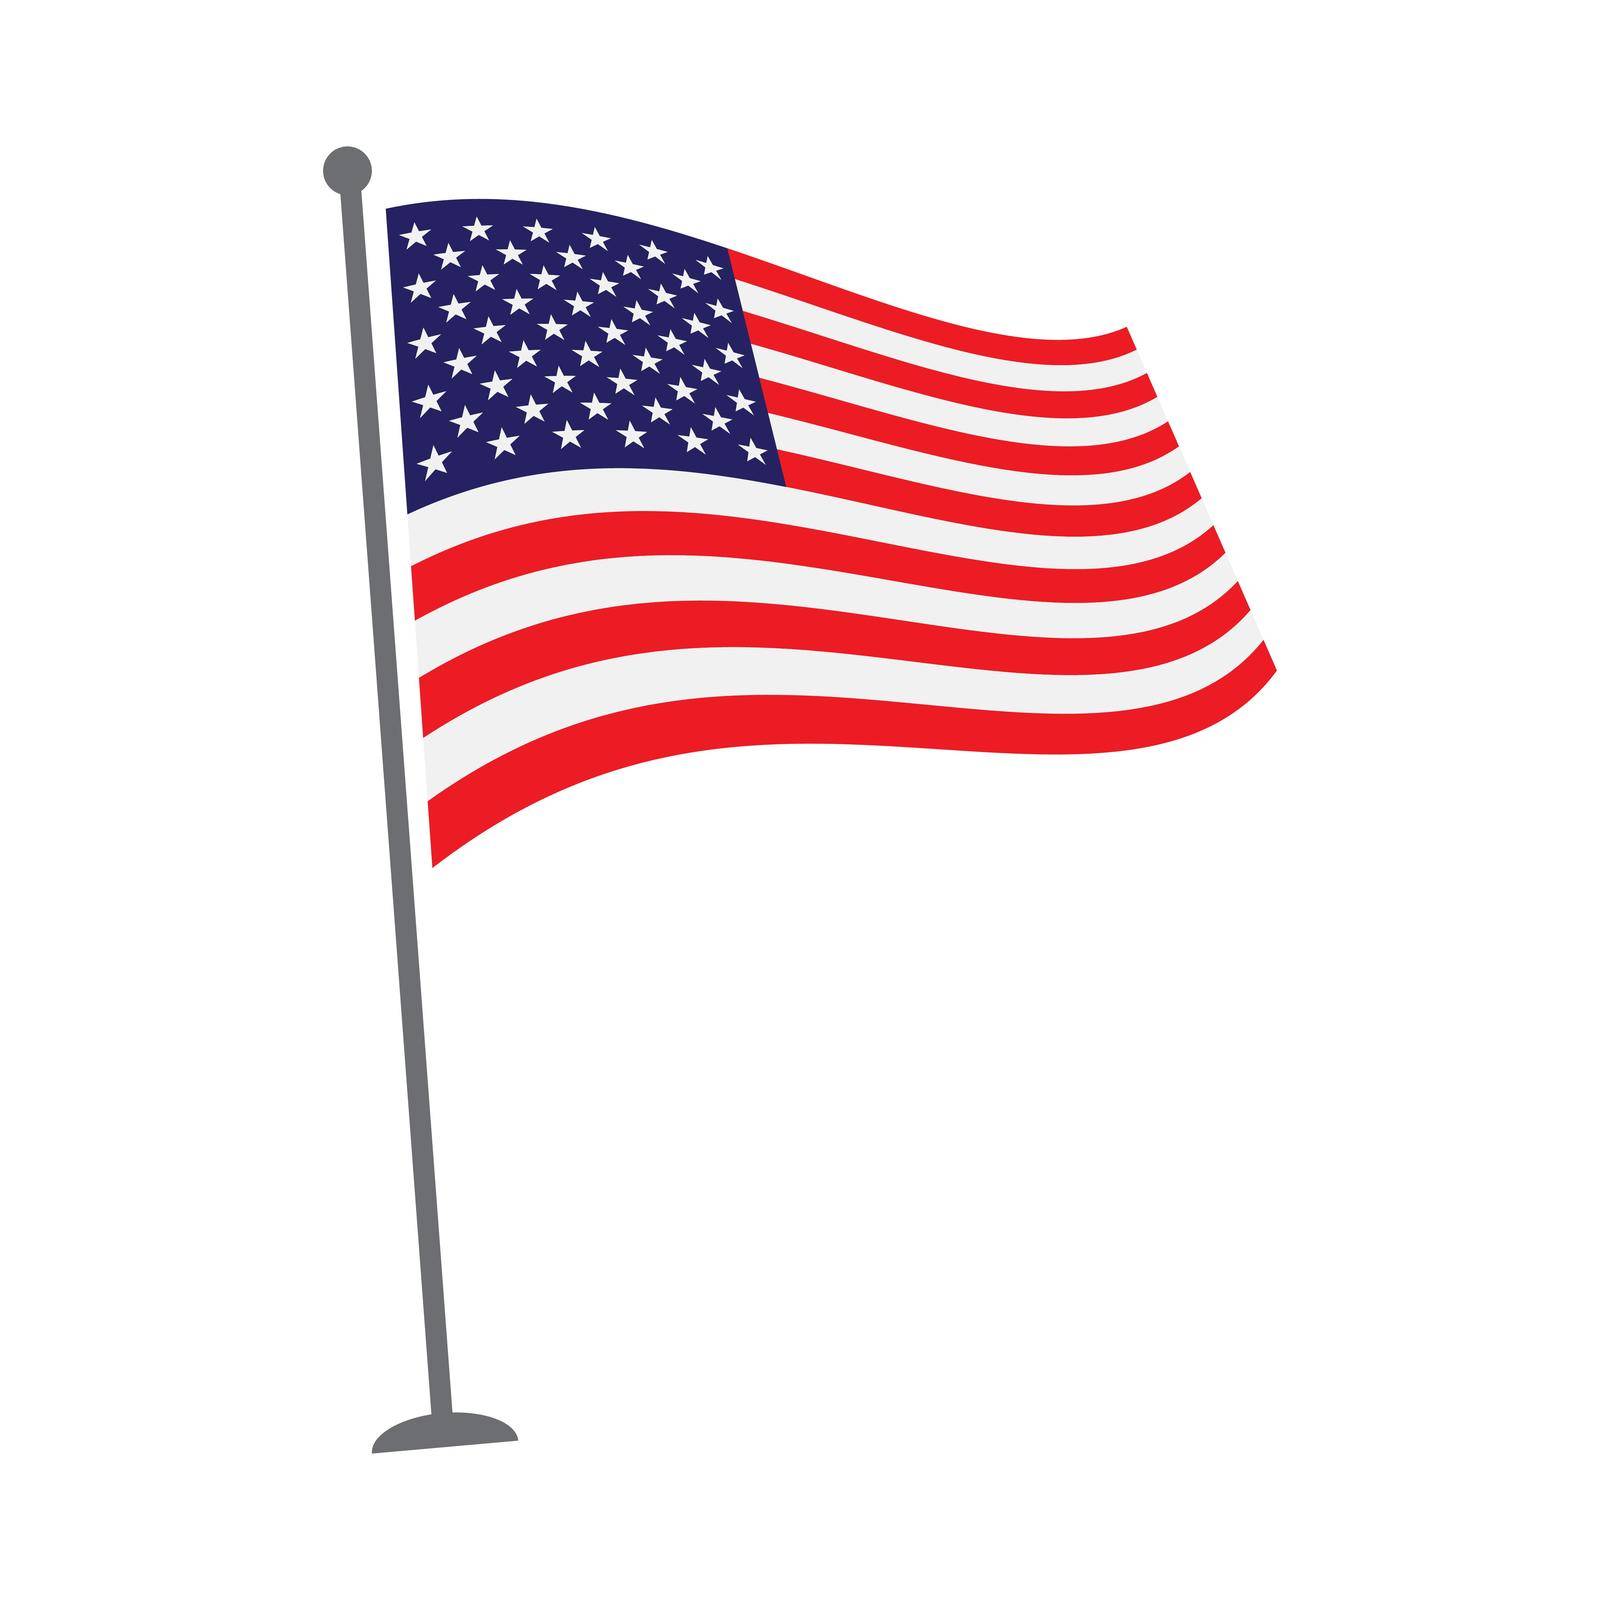 American flag illustration by awk